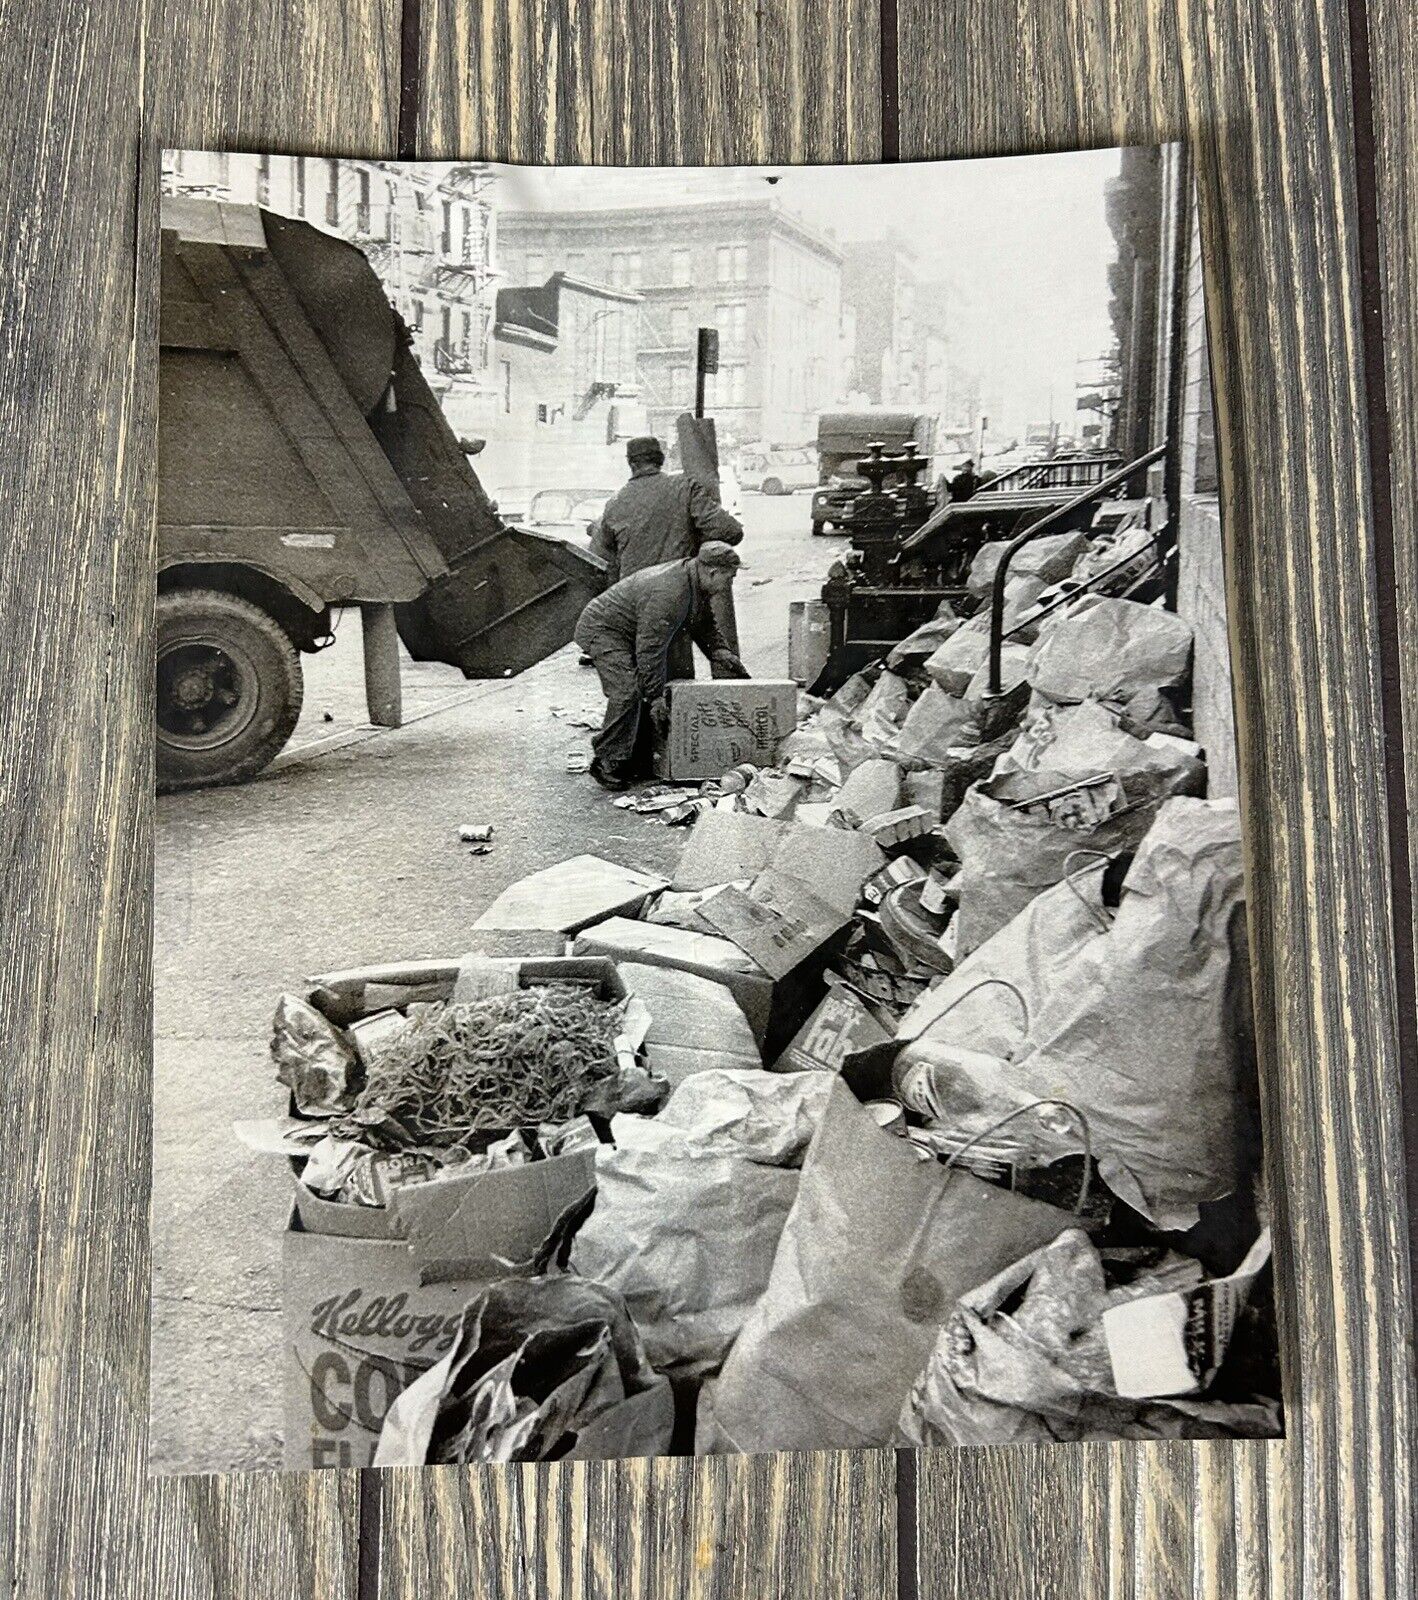 Vintage 1968 New York Clean Up Under Way Black White Photograph 8.25” x 6.75”